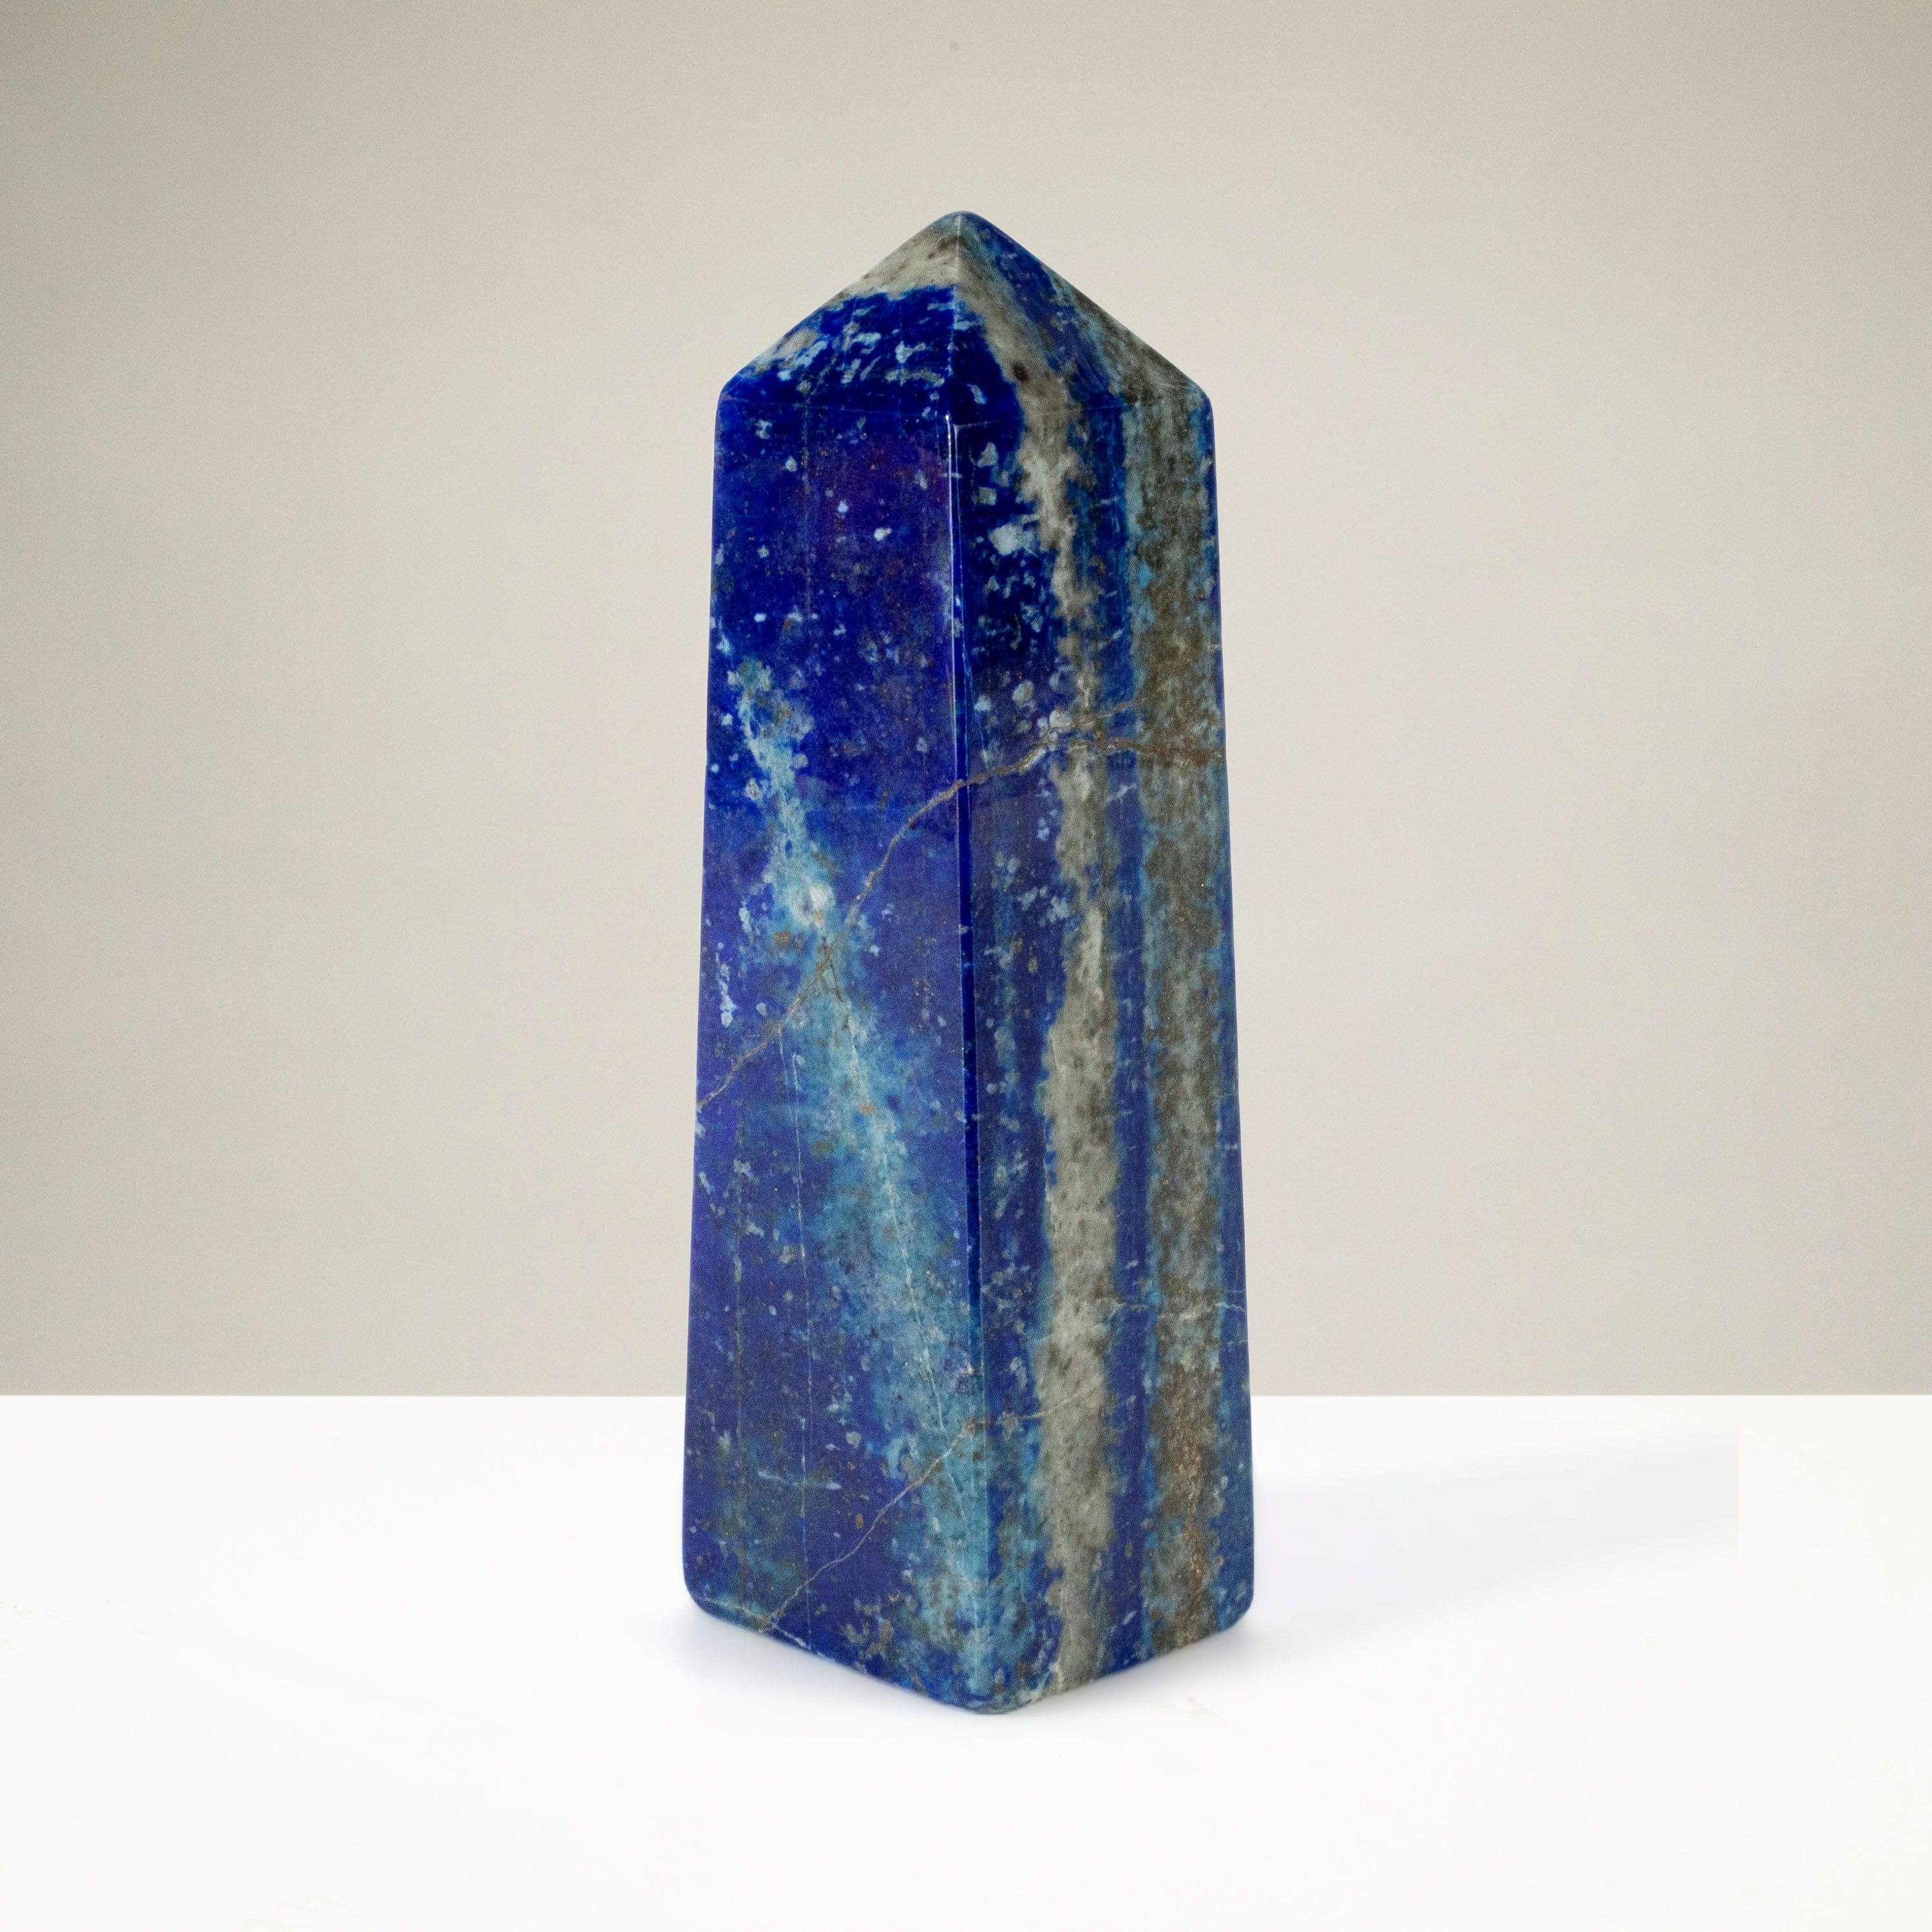 Kalifano Lapis Lapis Lazuli Polished Obelisk from Afghanistan - 5" / 346 grams LPOB700.001